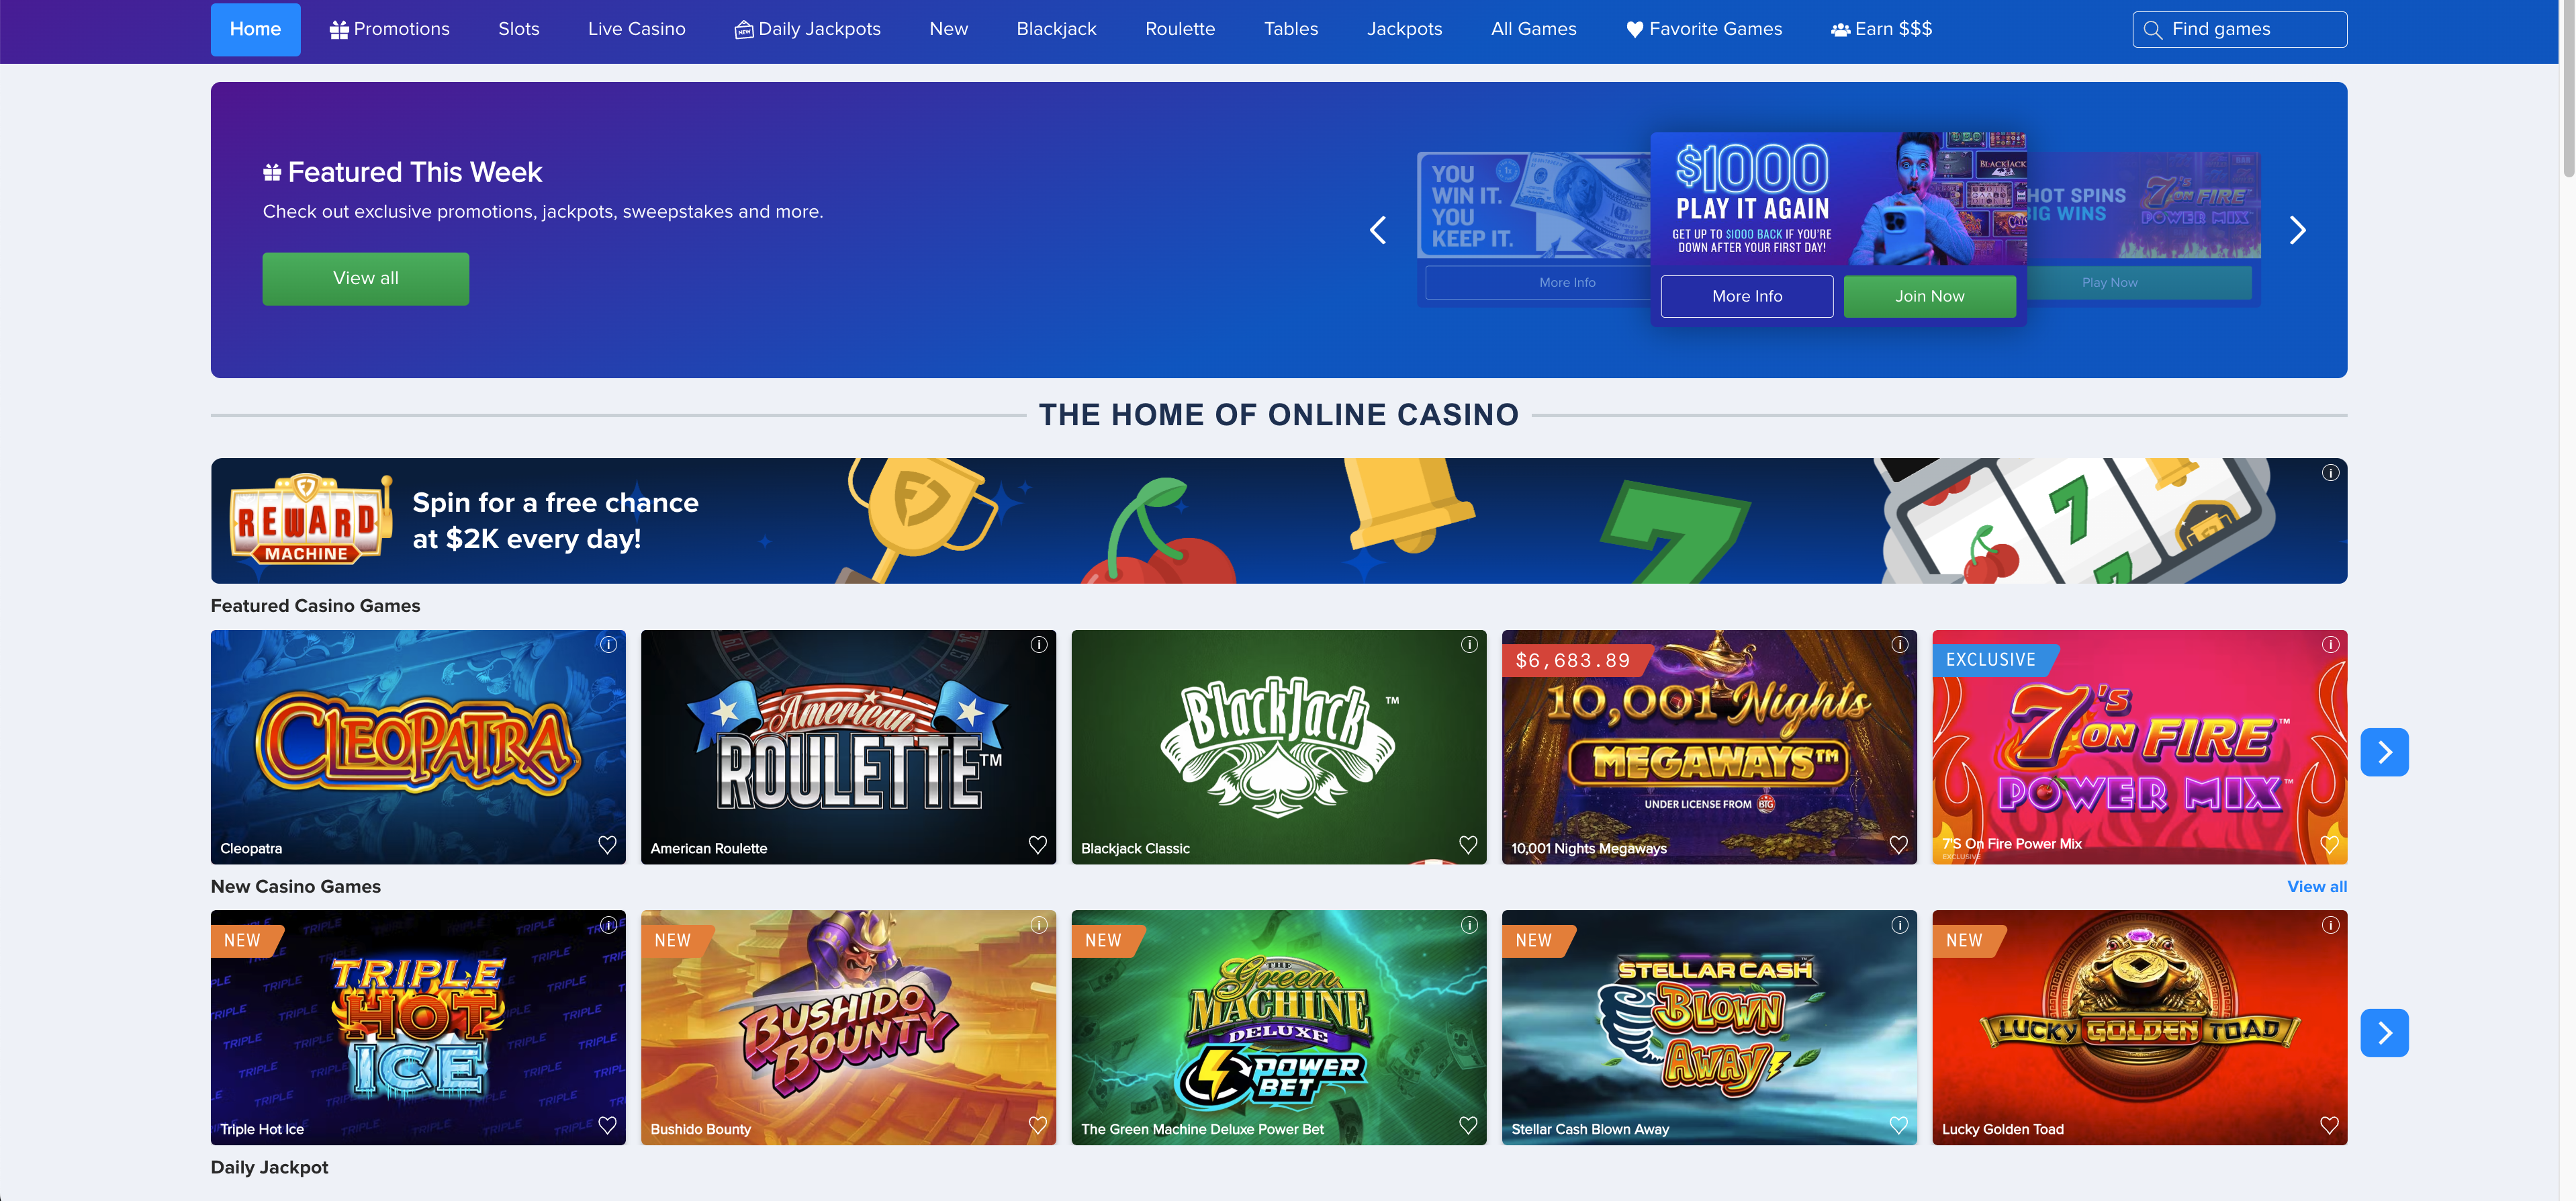 The best online casino jackpot slots in Pennsylvania 